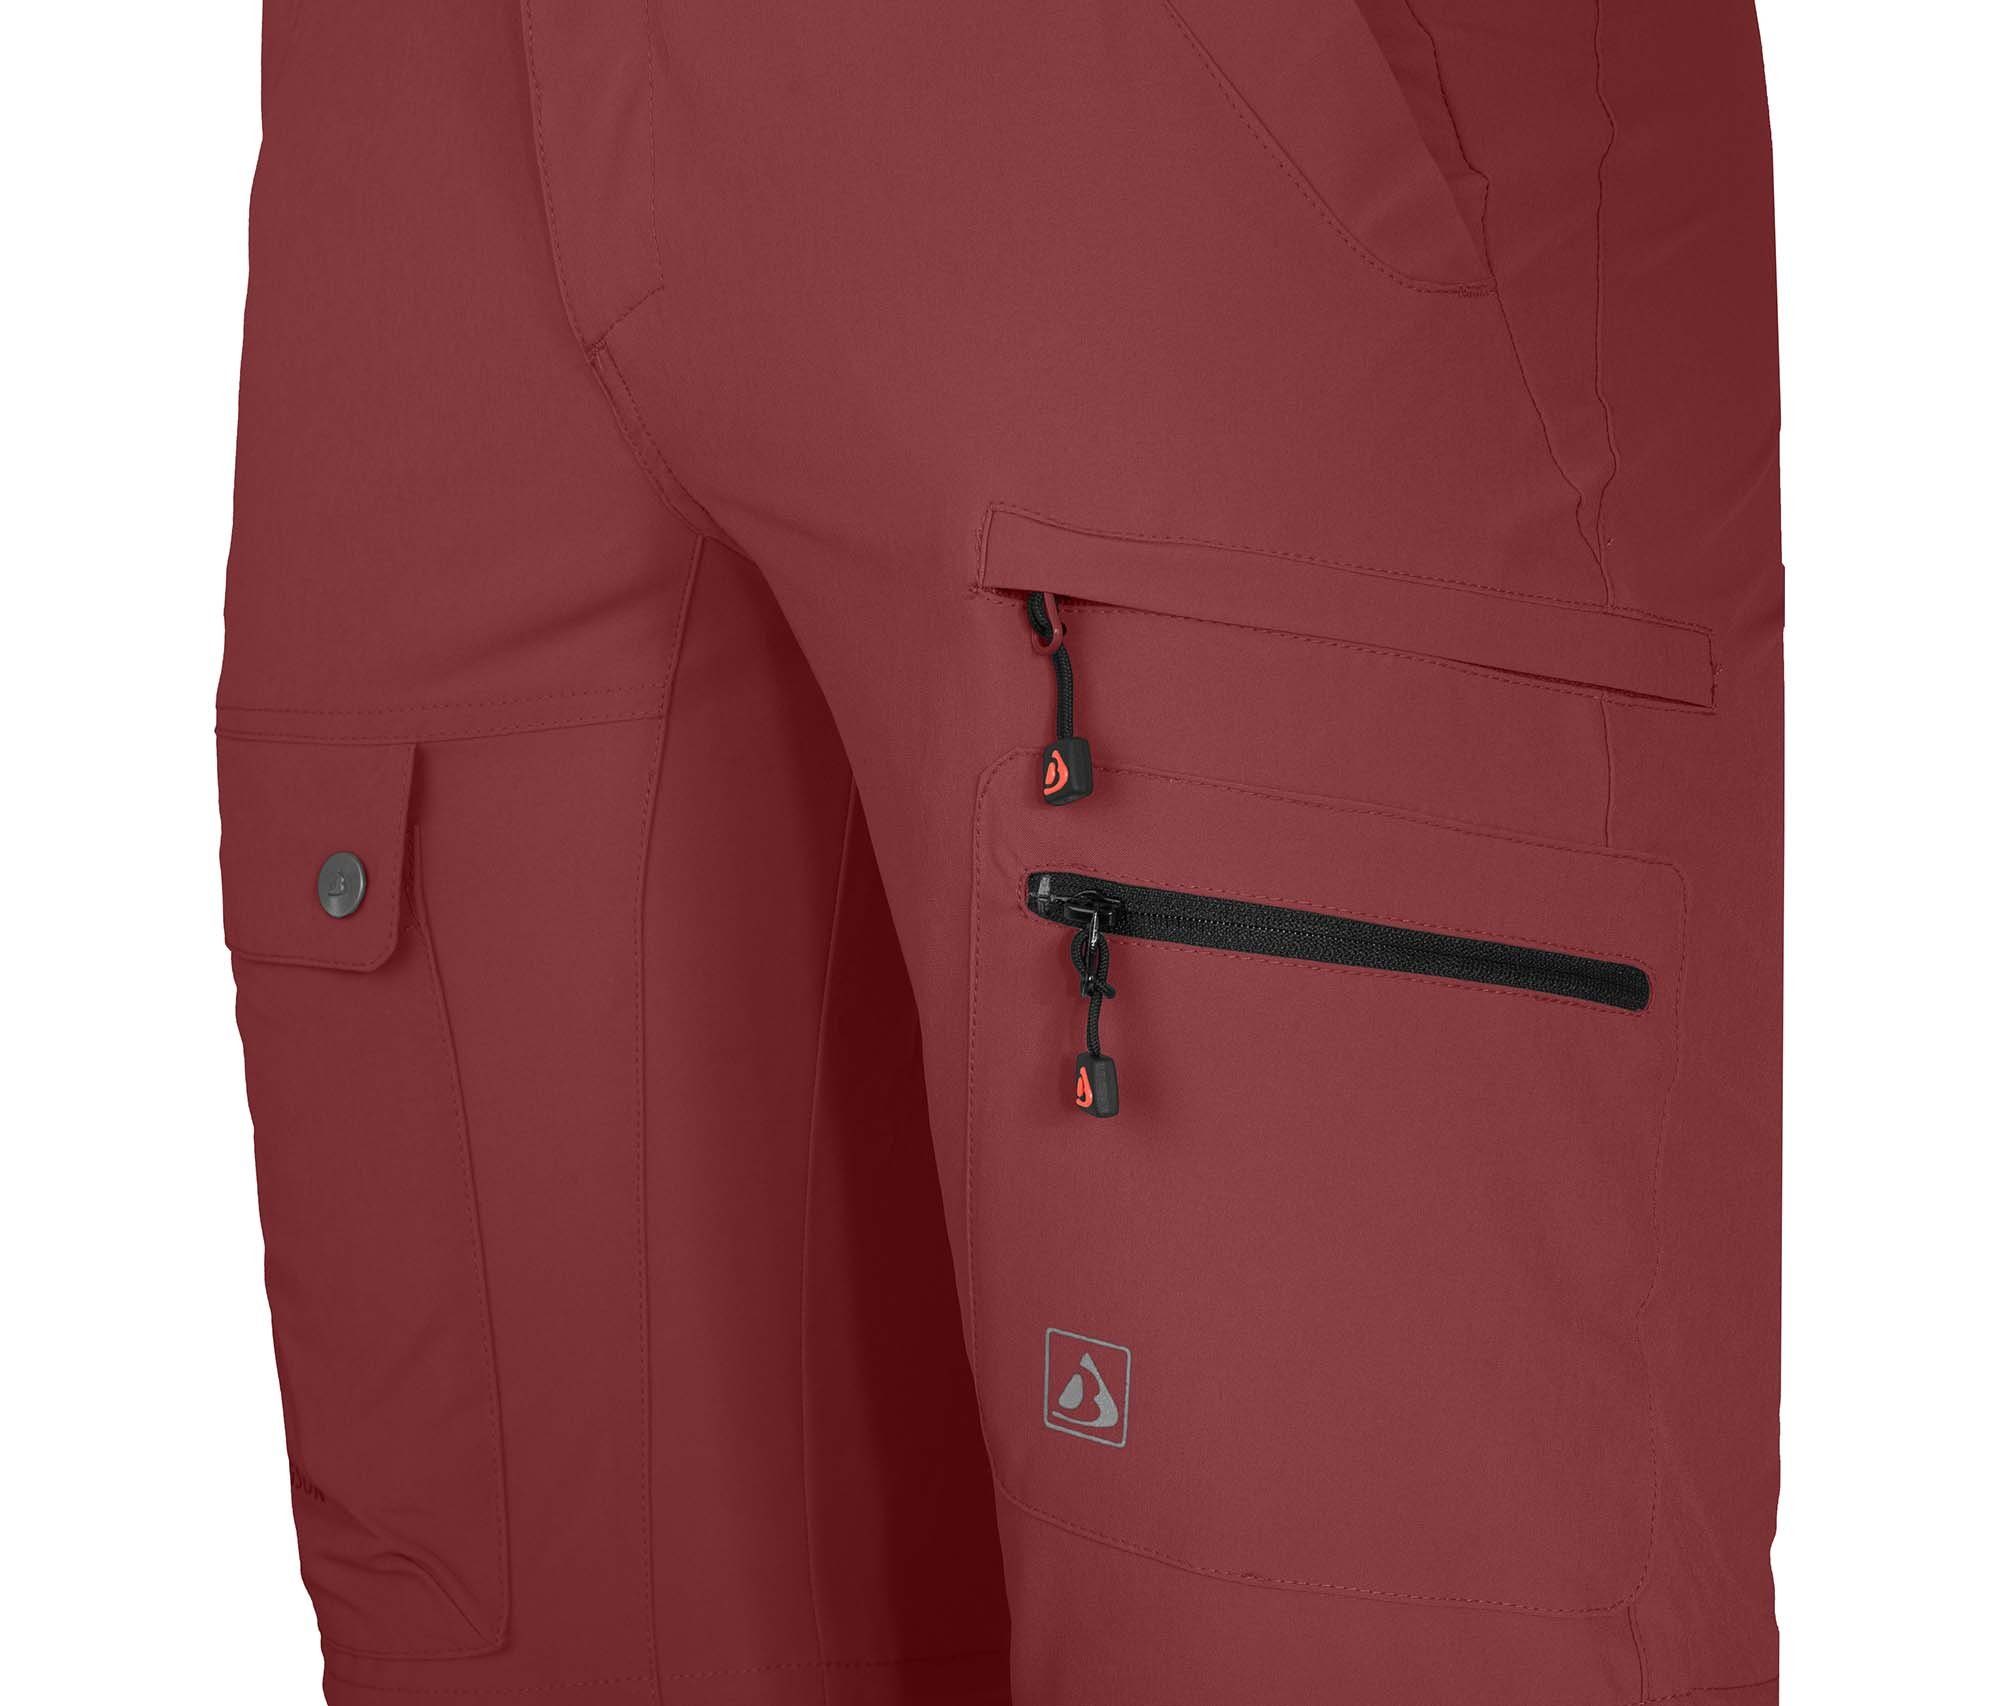 FROSLEV Normalgrößen, Zipp-Off Wanderhose, braun 8 rot Herren Taschen, elastisch, Bergson recycelt, Zip-off-Hose Bermuda